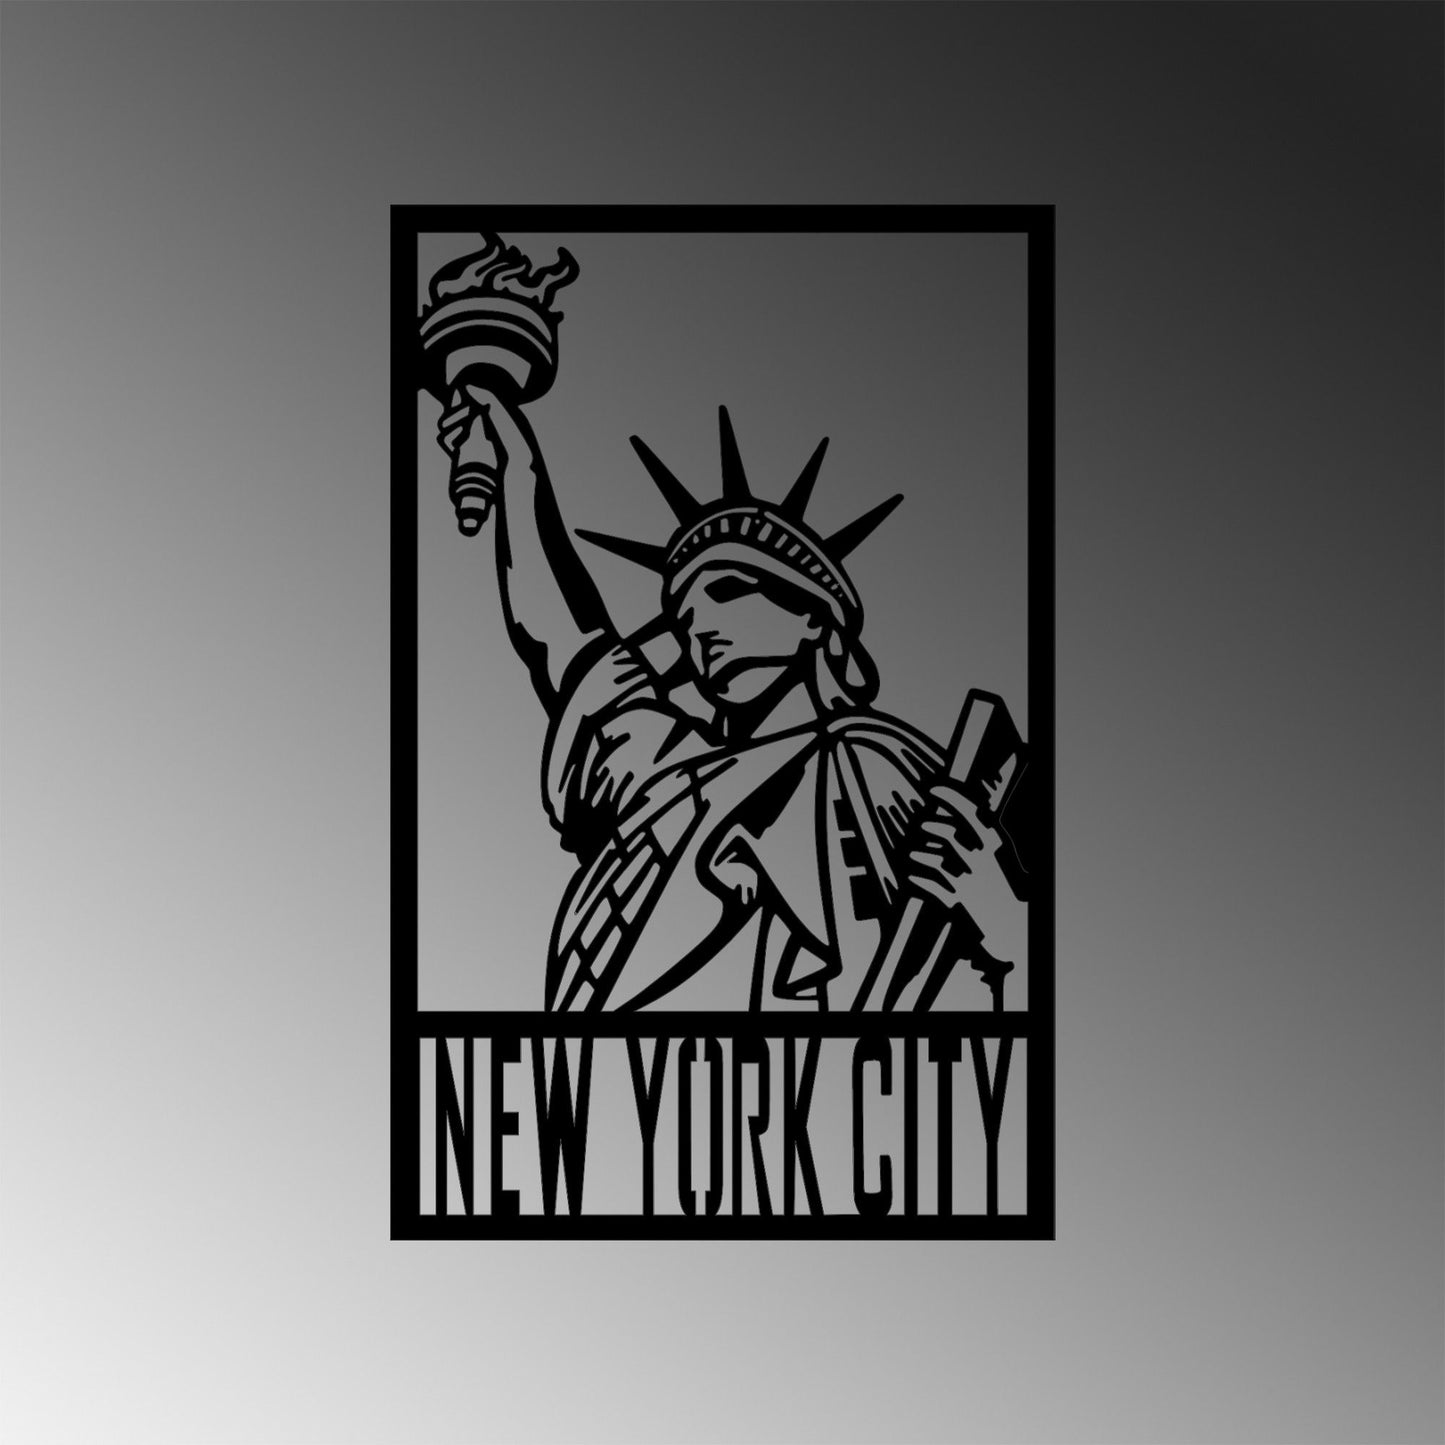 New York City - Decorative Metal Wall Accessory